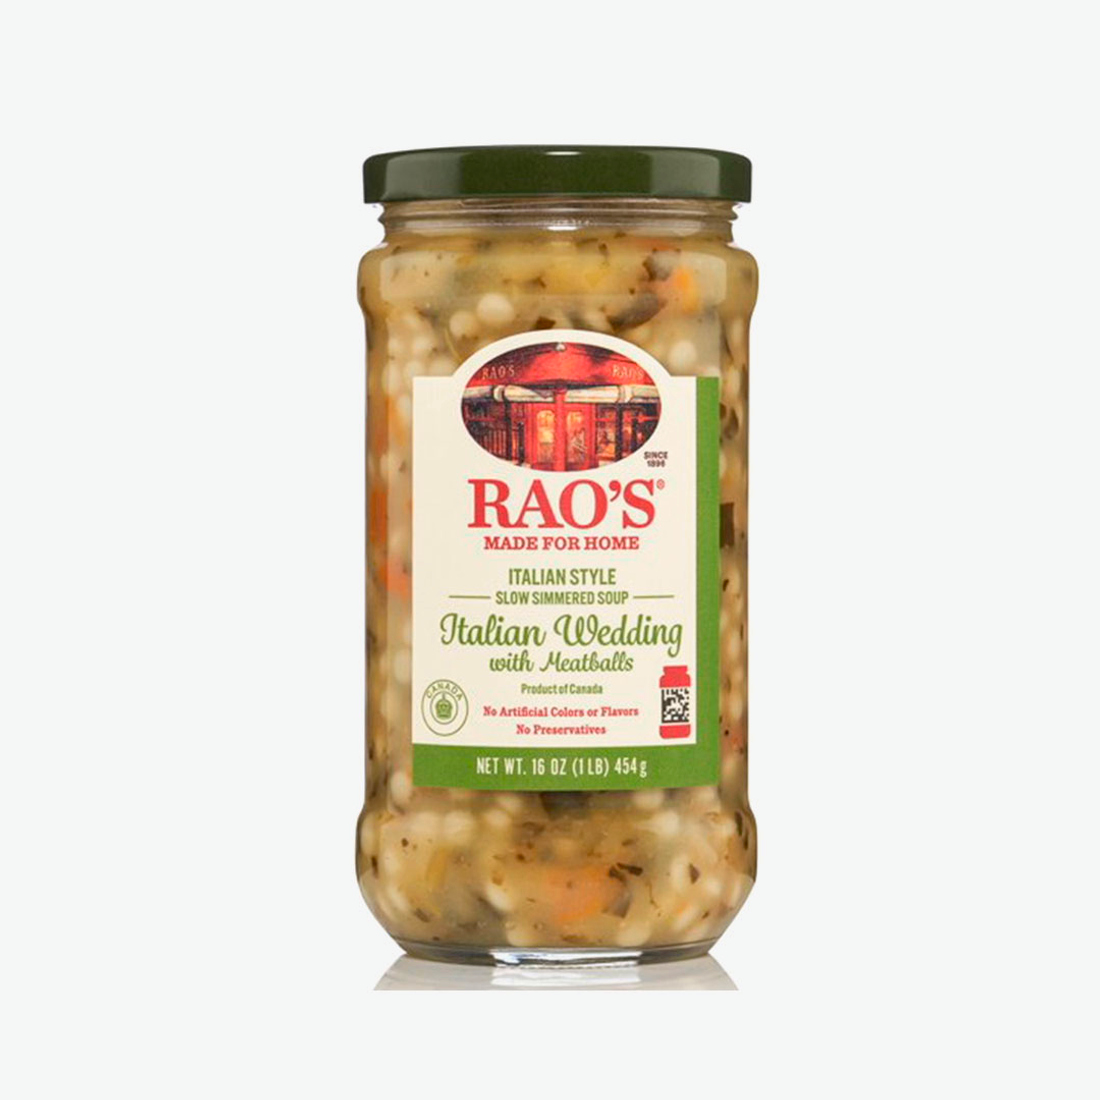 Rao's Soup, Slow Simmered, Italian Wedding with Meatballs, Italian Style - 16 oz